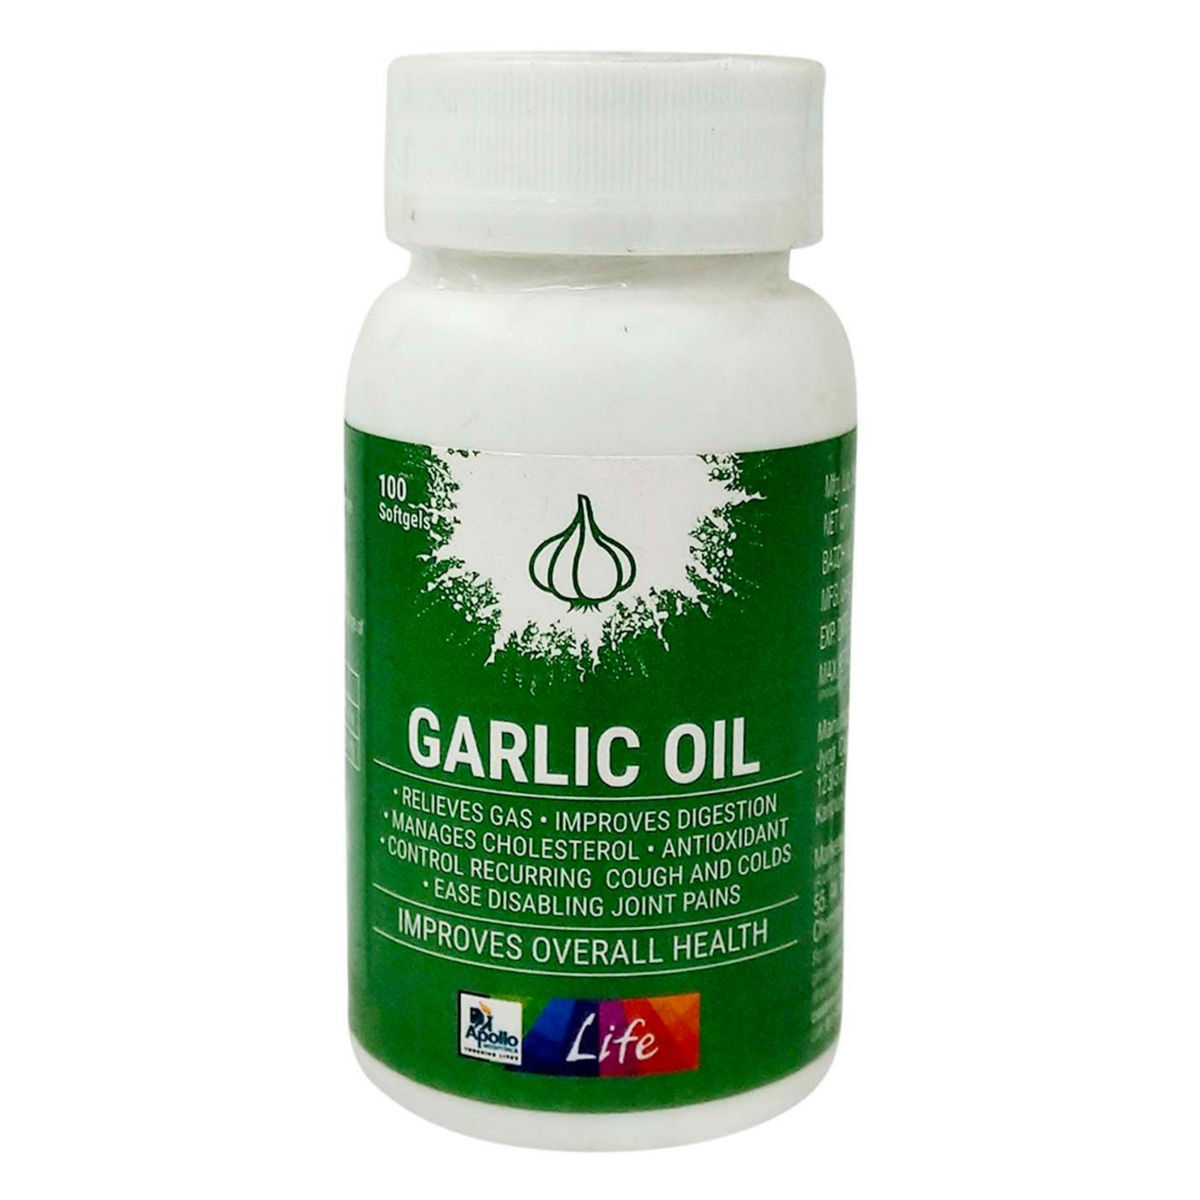 Buy Apollo Life Garlic Oil Softgel, 100 Capsules Online